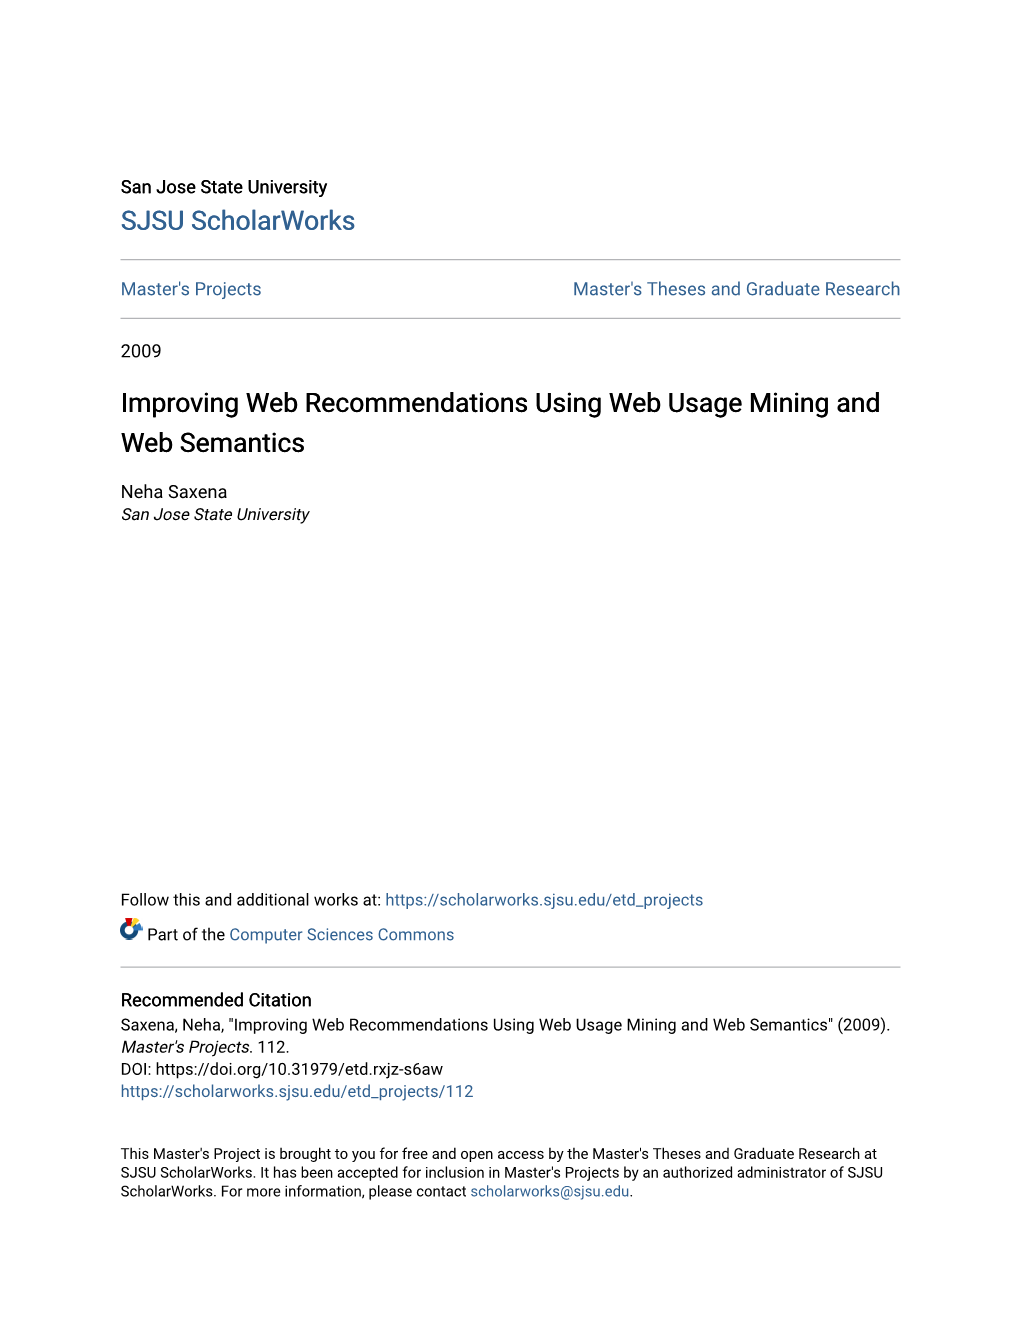 Improving Web Recommendations Using Web Usage Mining and Web Semantics